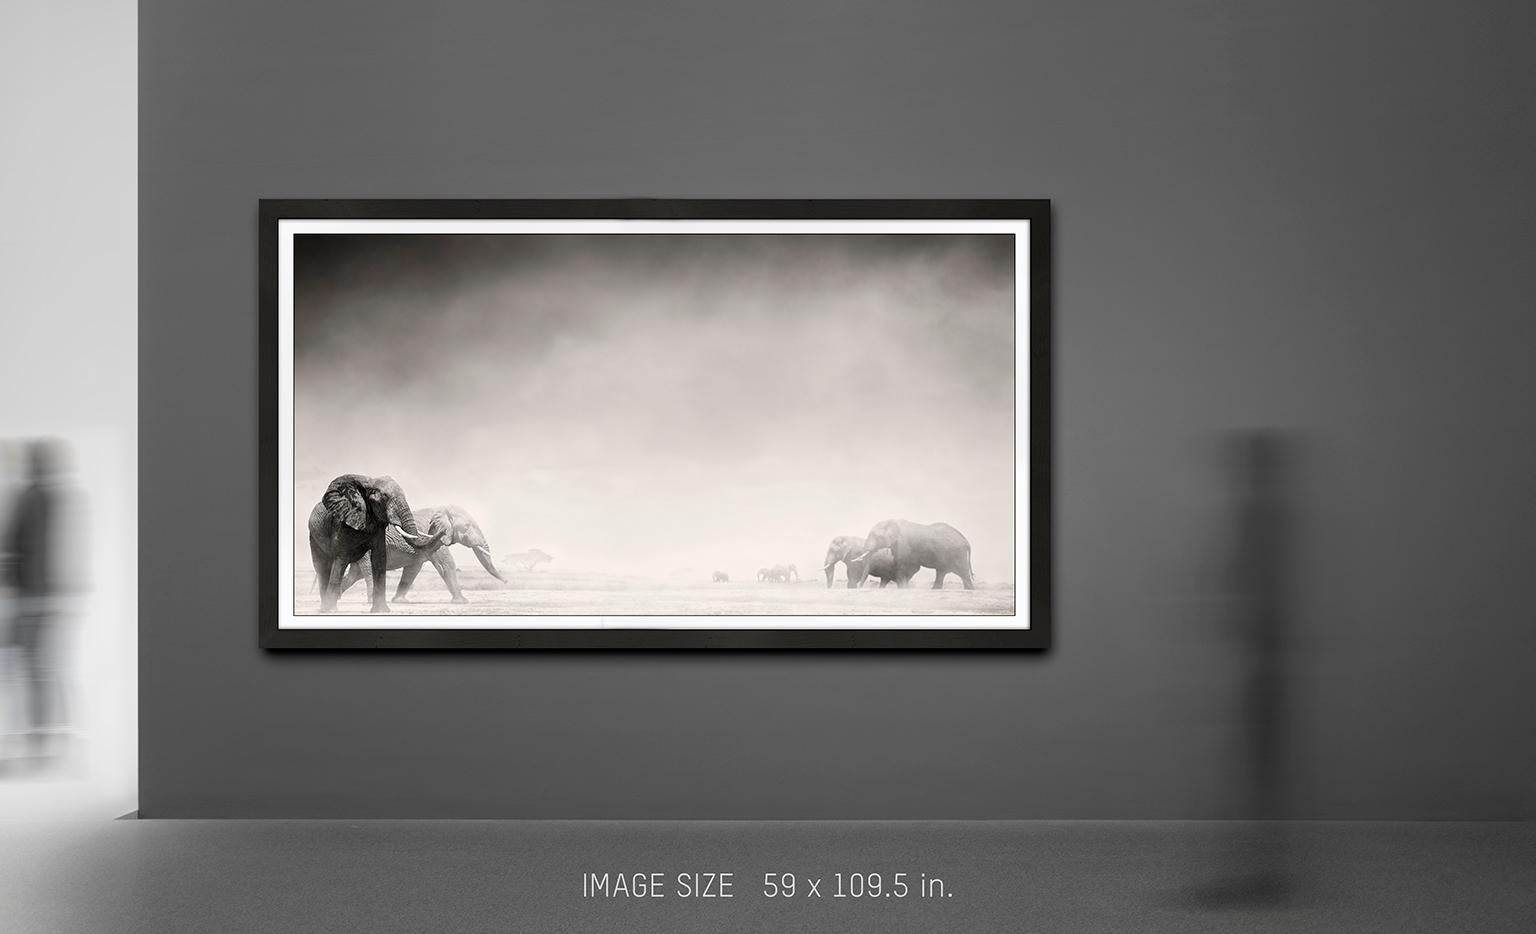 Elephants in the Dust I, Kenya, Elephant, wildlife, b&w photography - Gray Landscape Photograph by Joachim Schmeisser